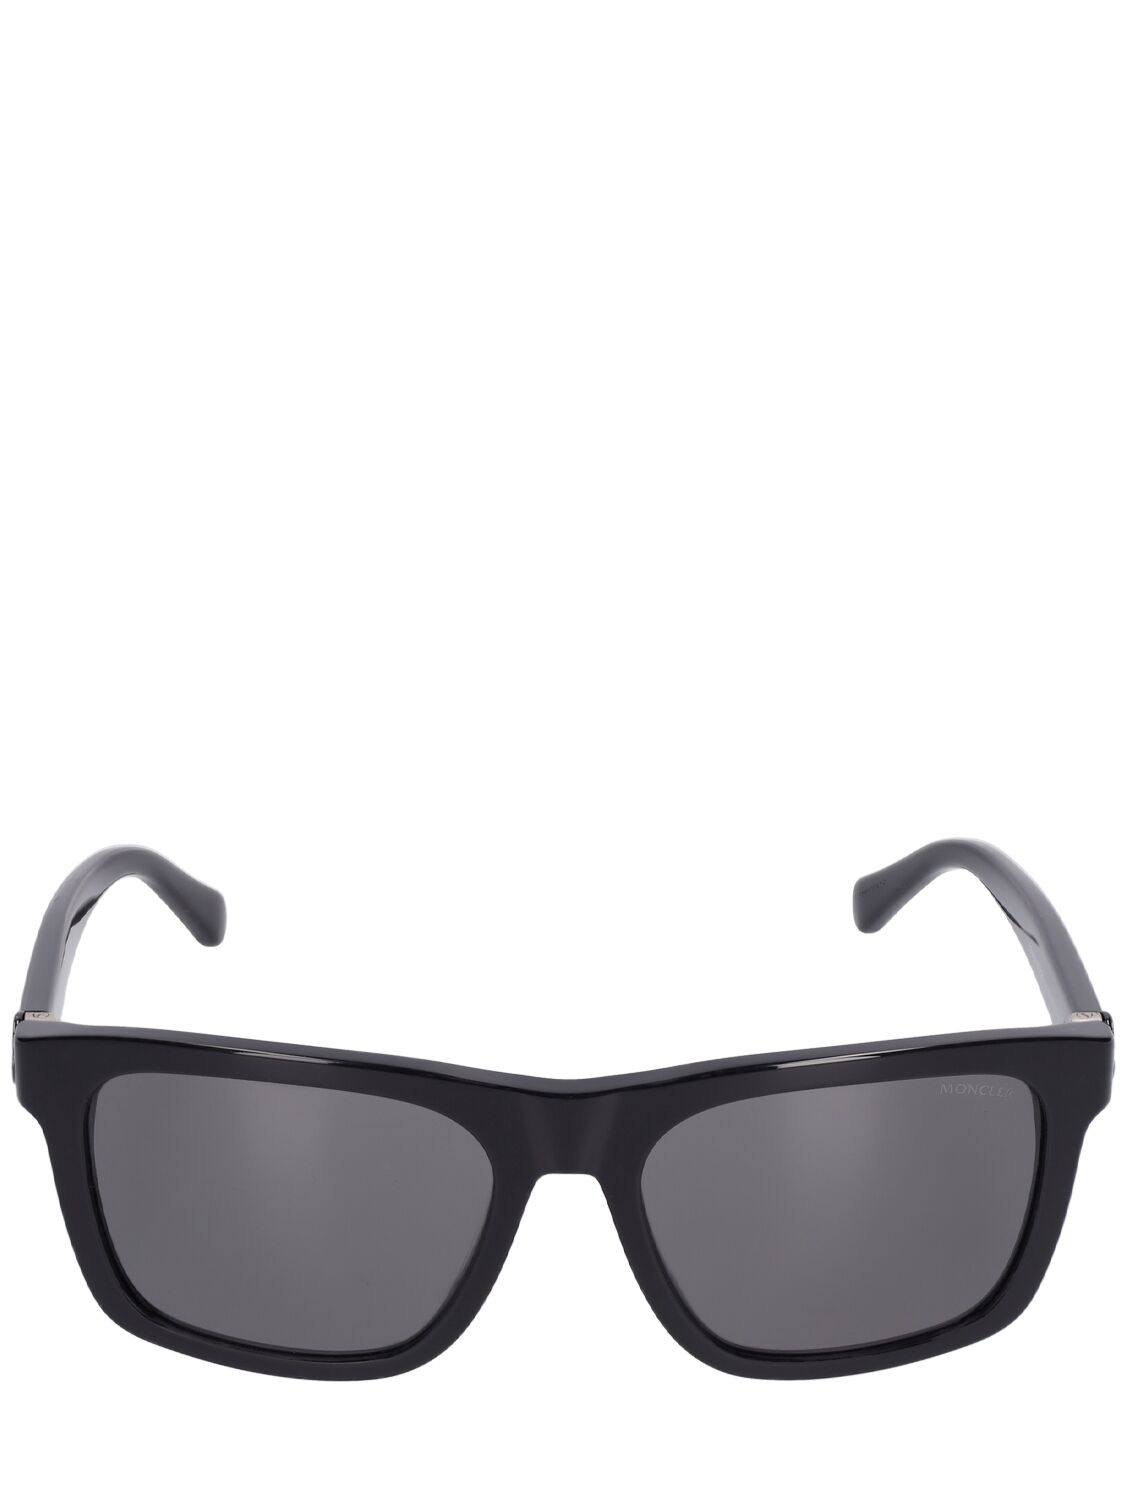 Moncler Colada Squared Sunglasses In Shiny Black